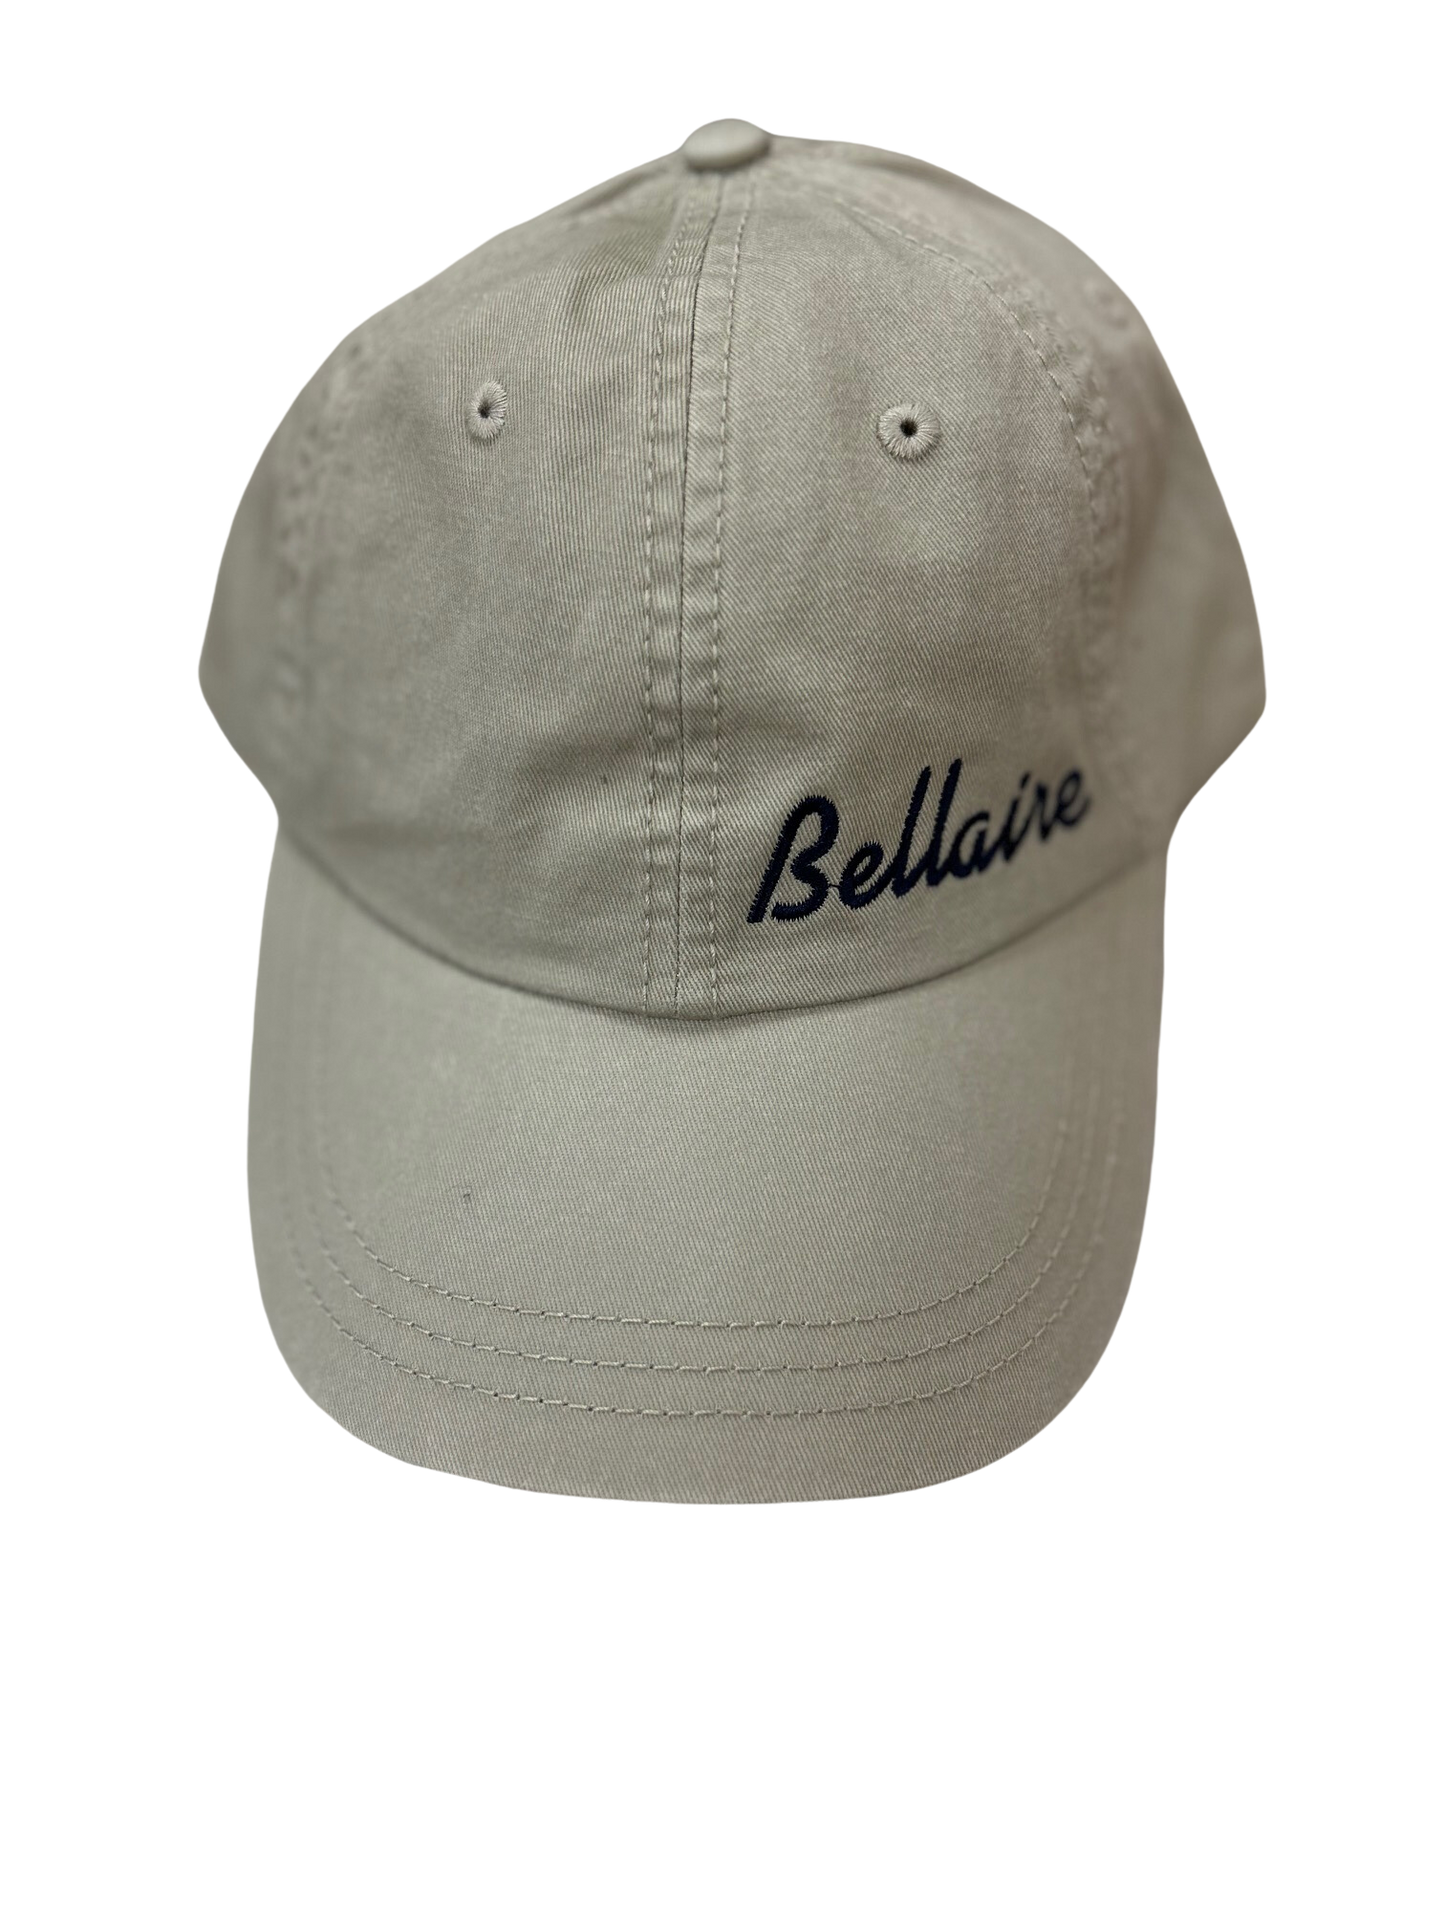 Bellaire Baseball Cap